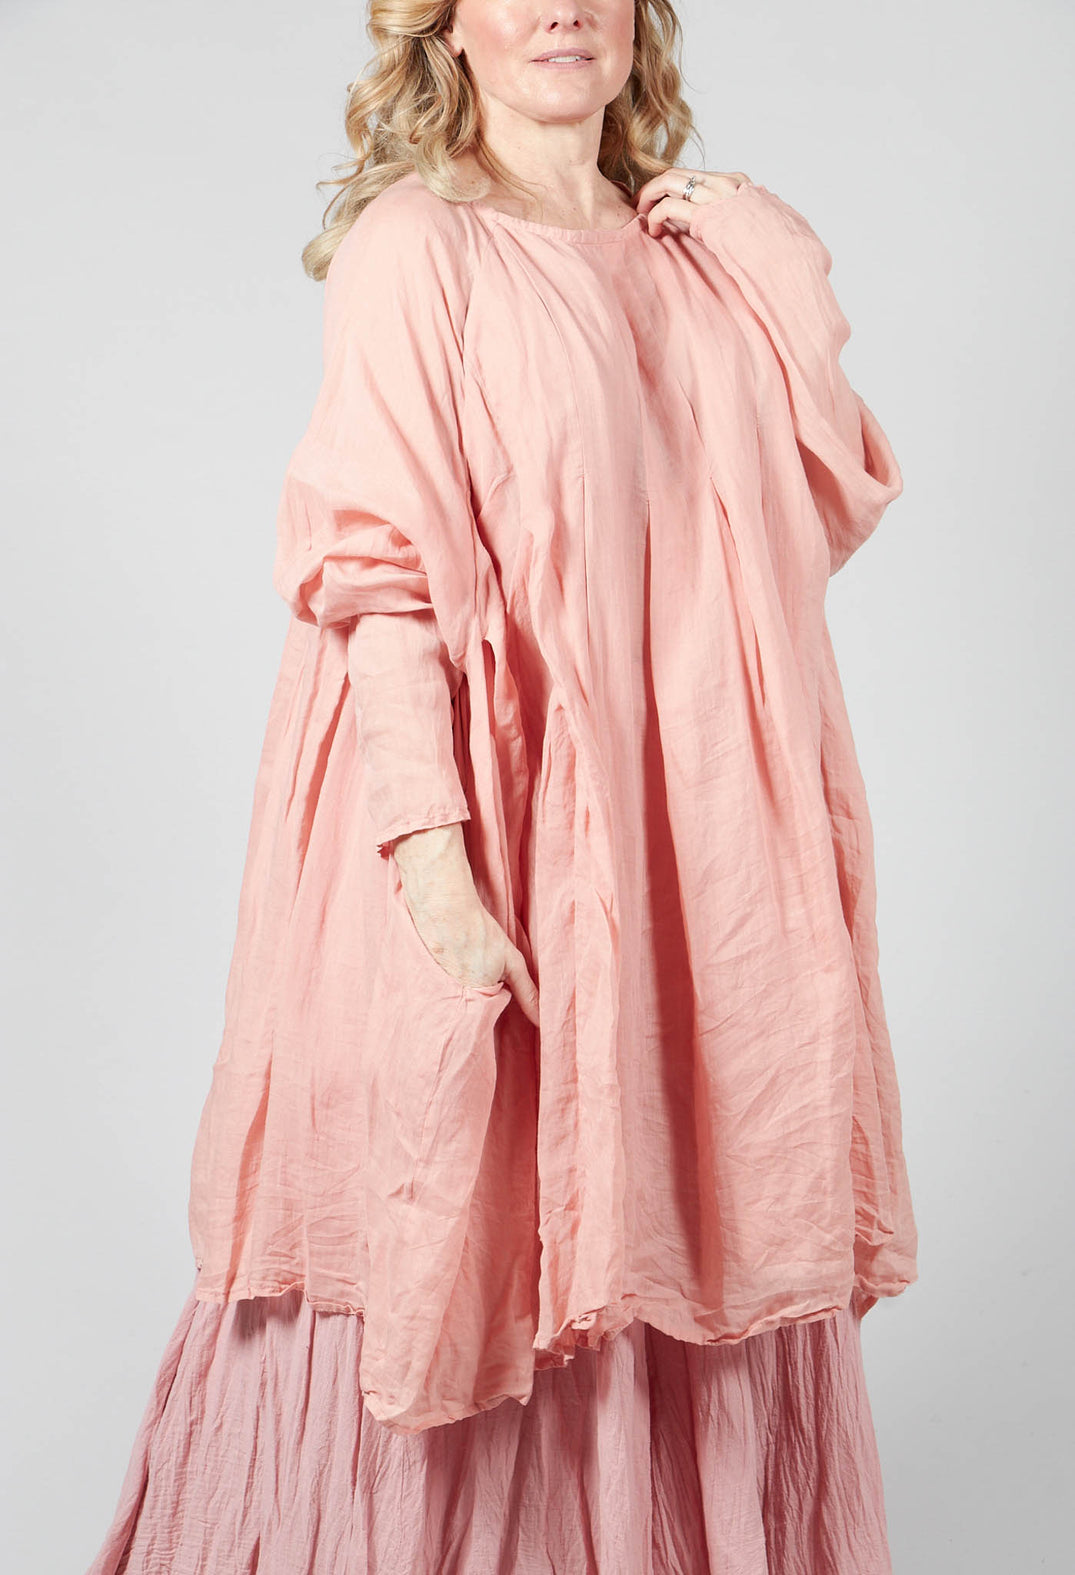 Kunsteh Tunic in Lotus Pink